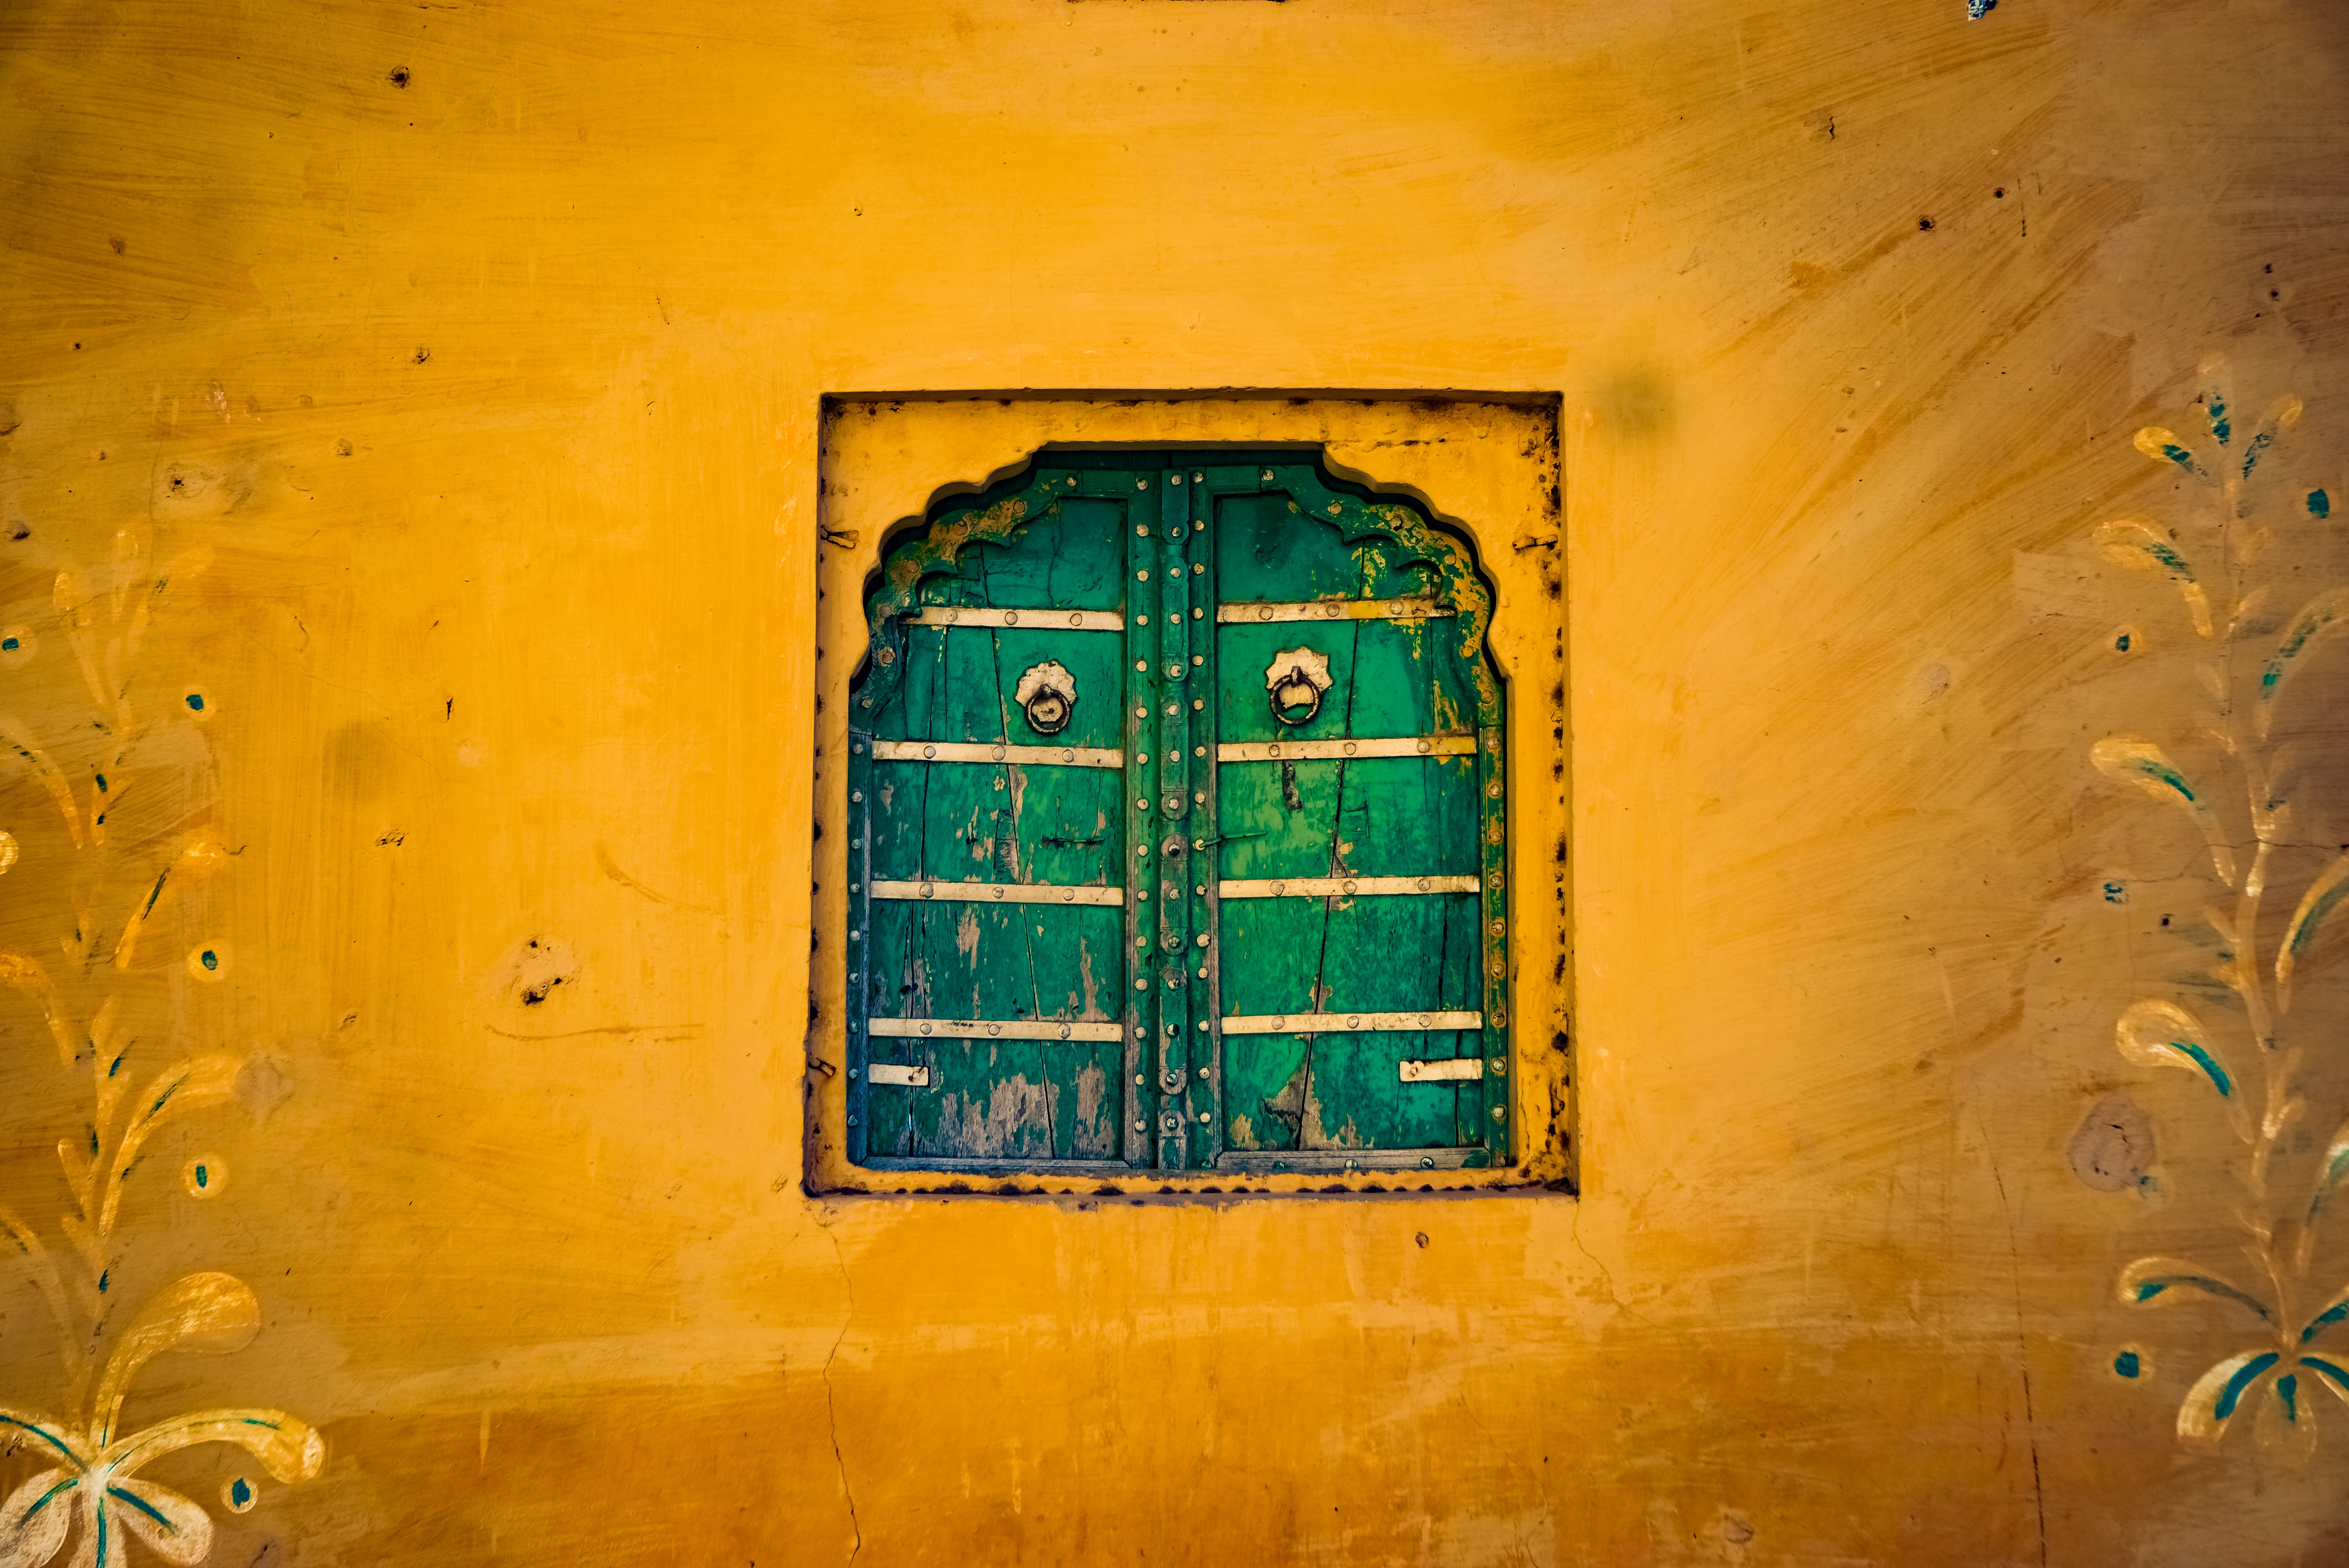 fondos de pantalla de rajput para teléfonos móviles,verde,amarillo,pared,puerta,madera